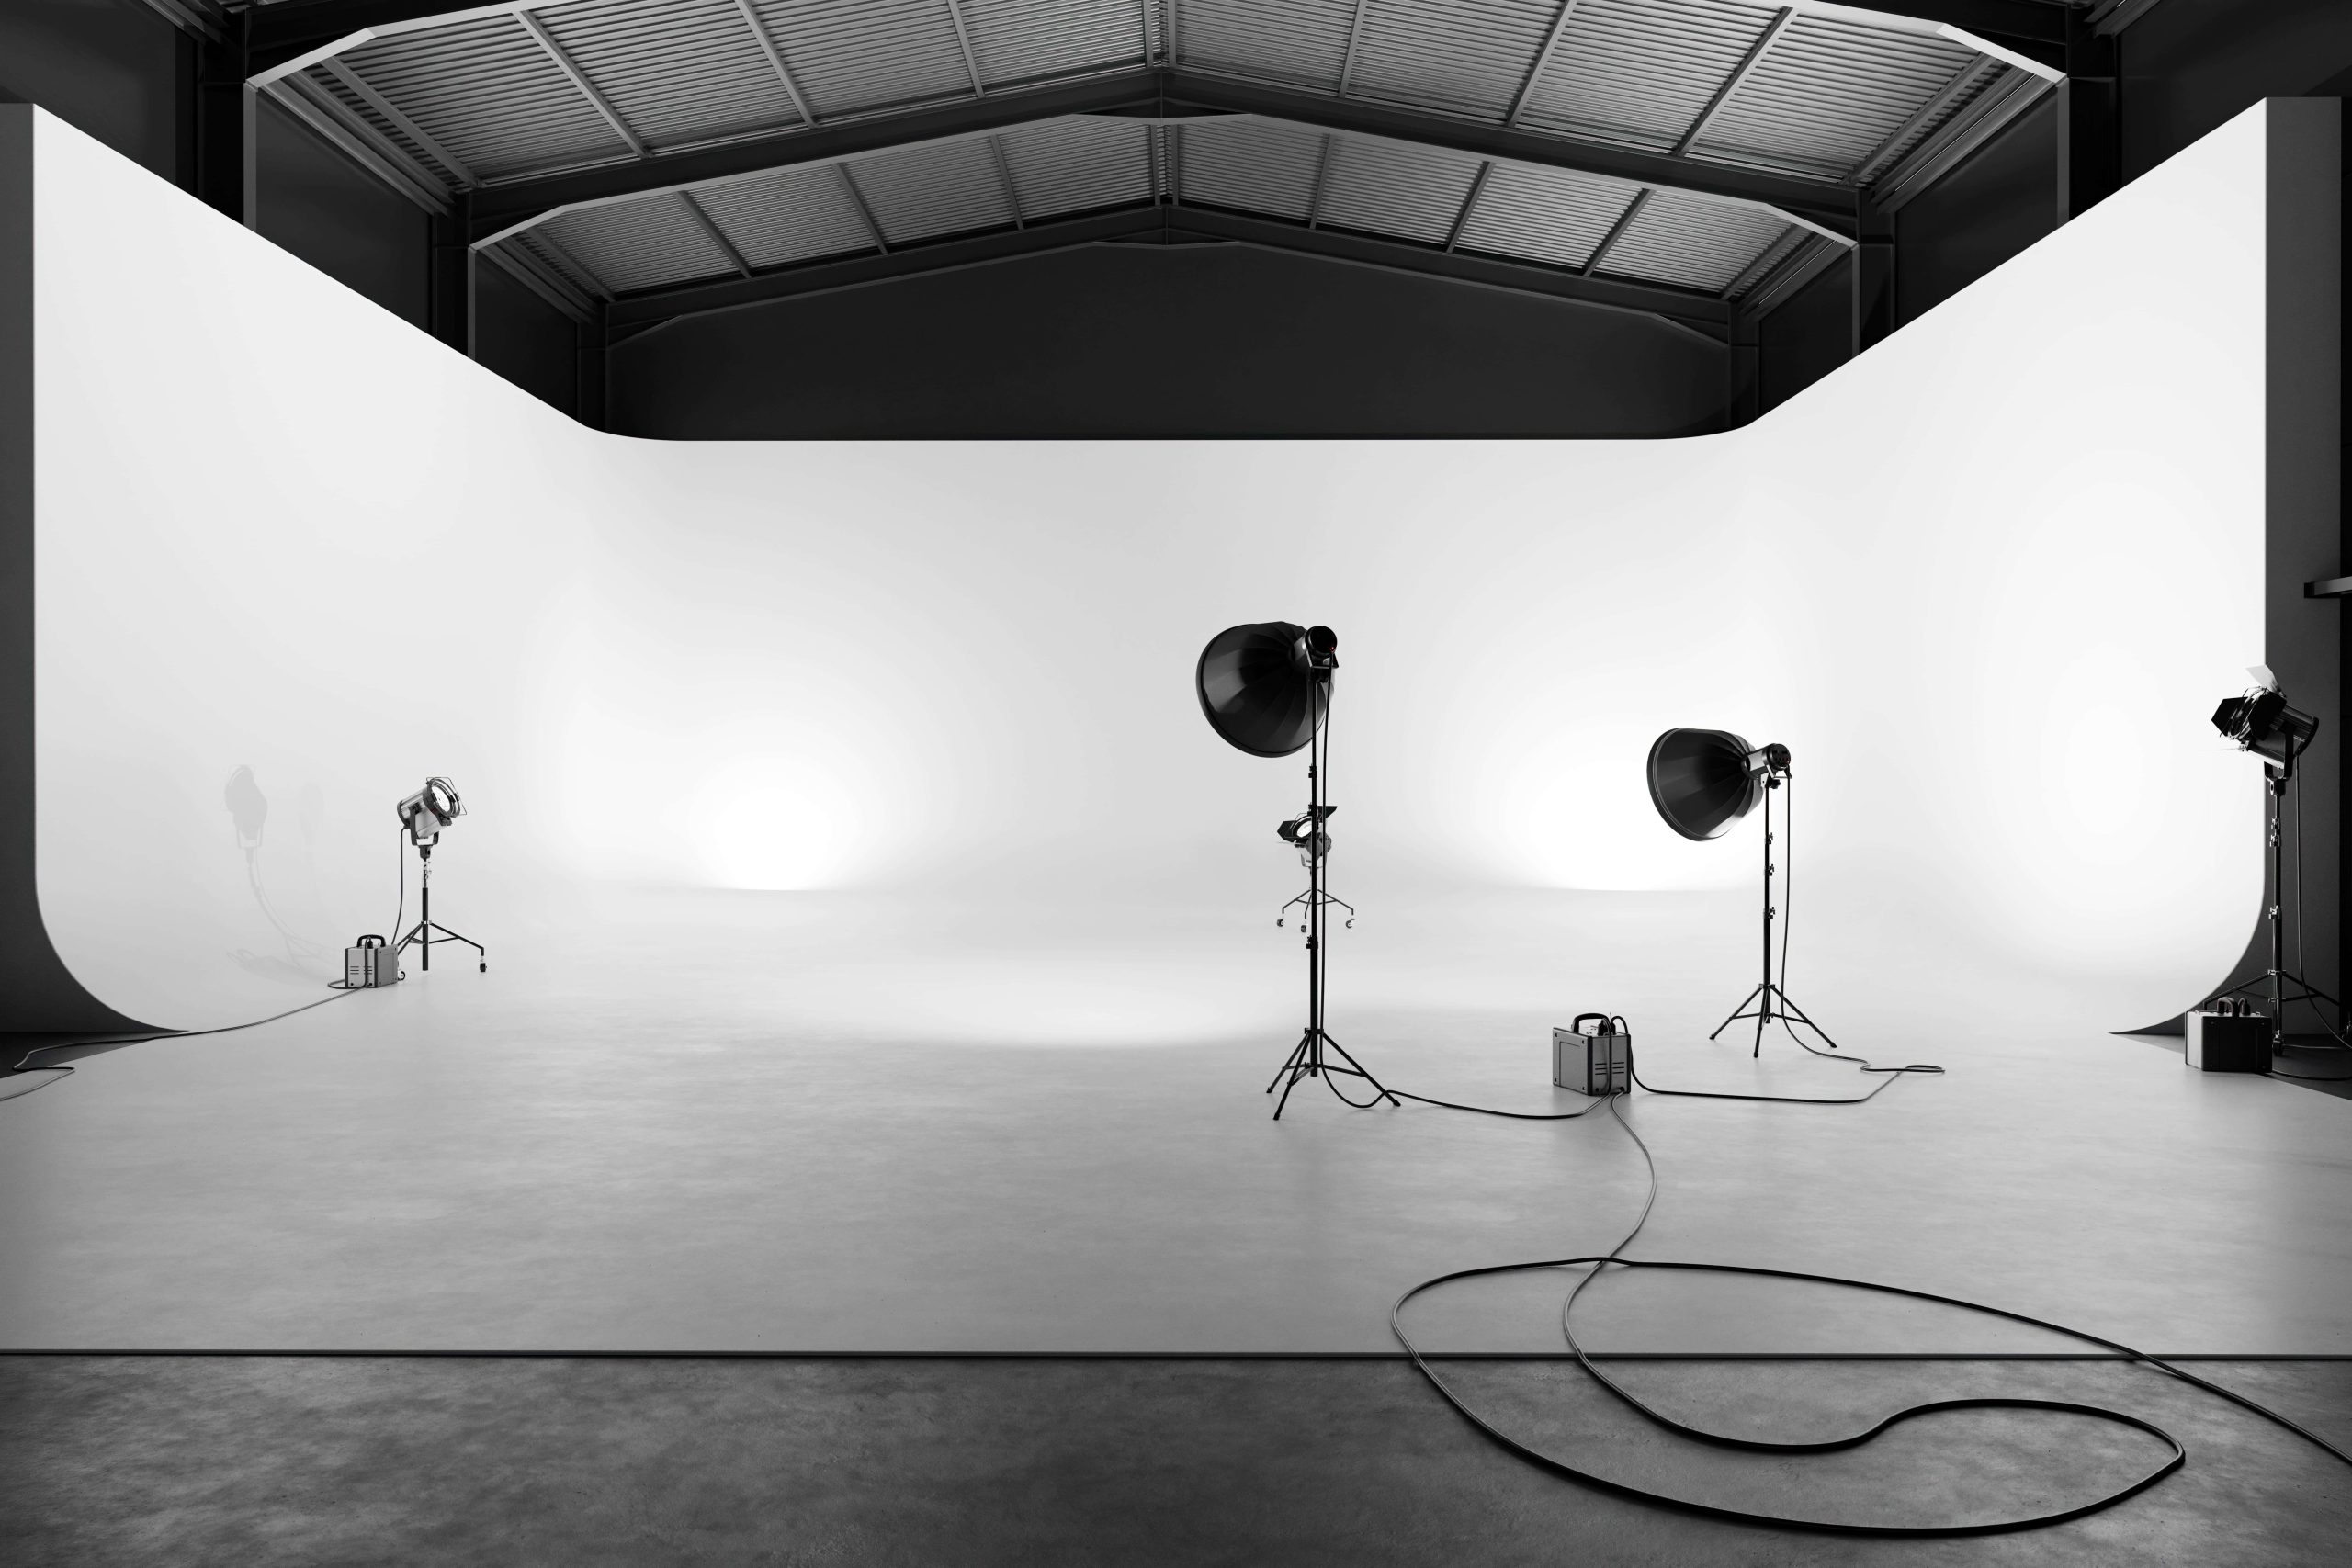 professional photography studio with lighting equi 2023 03 22 15 58 29 utc copy